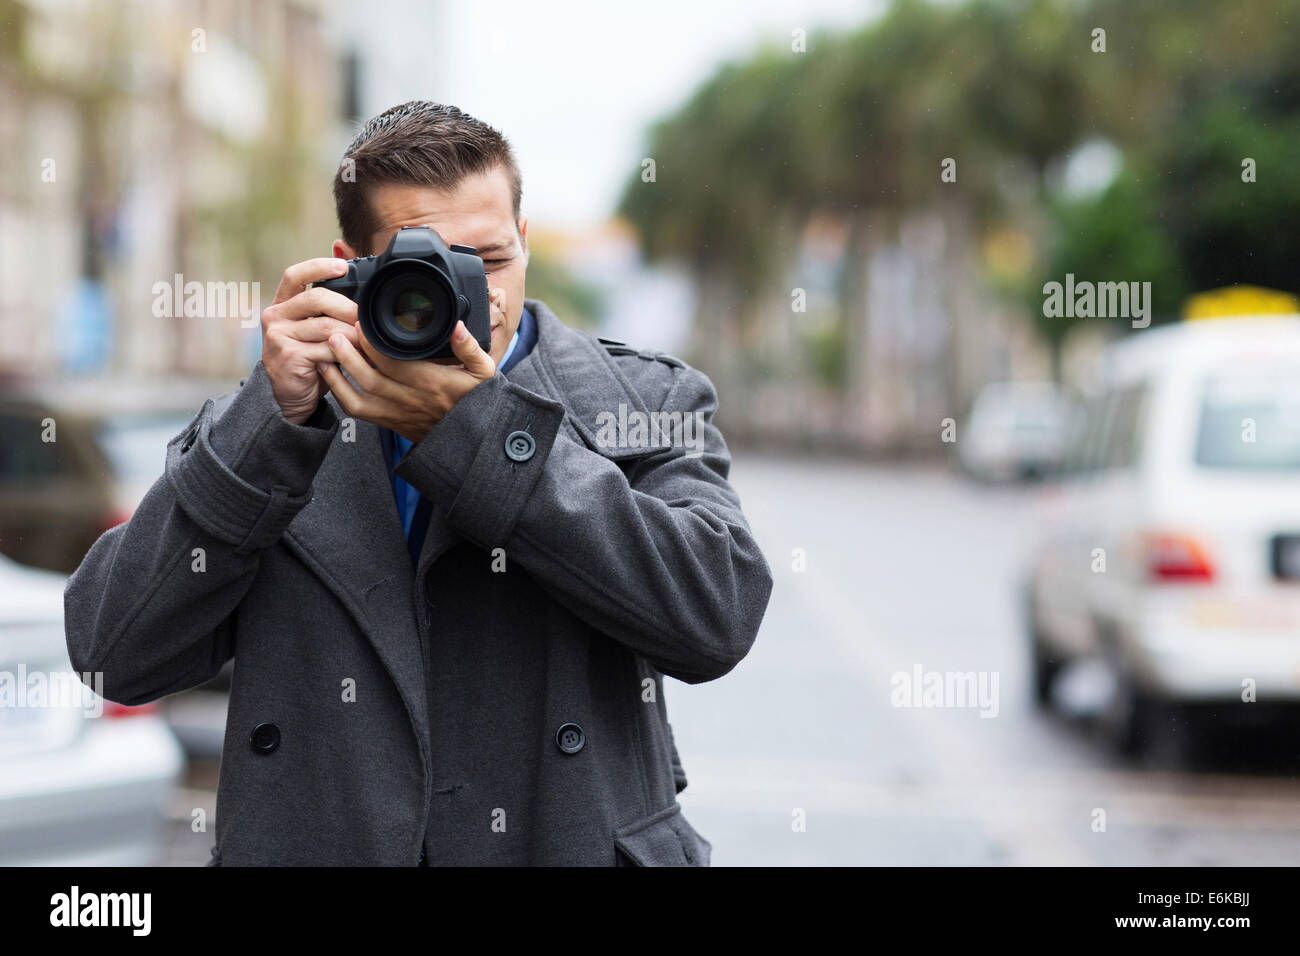 professional journalist taking photos outdoors Stock Photo